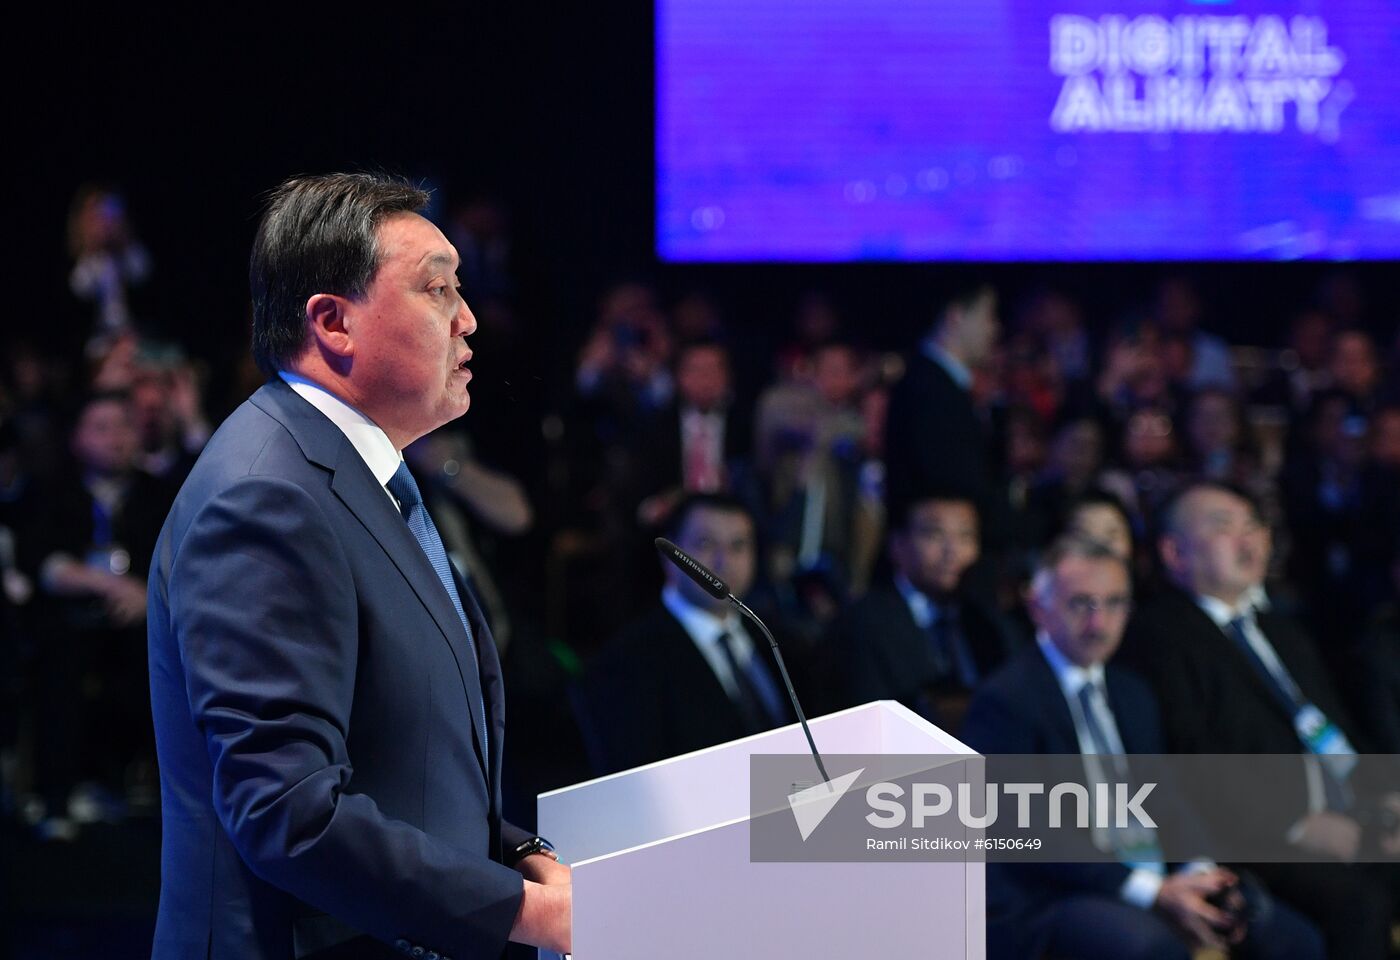 Kazakhstan Eurasian Intergovernmental Council Meeting